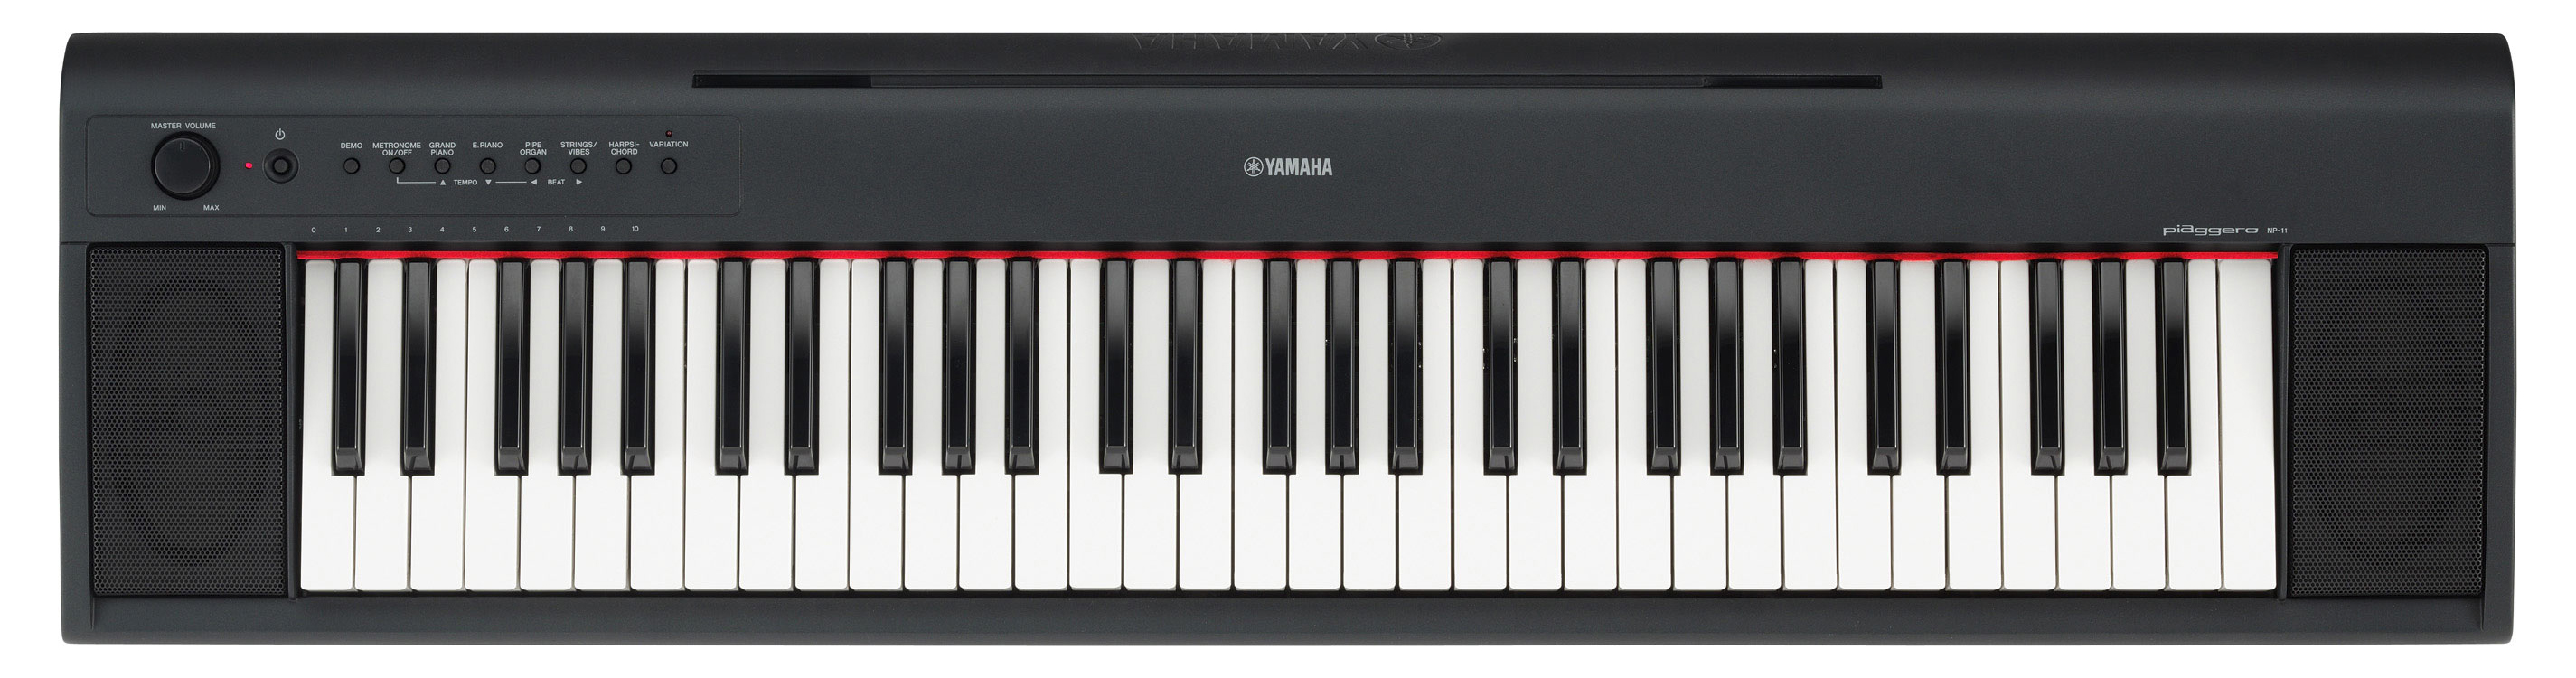 Yamaha Yamaha NP11 Piaggero 61-Key Digital Piano